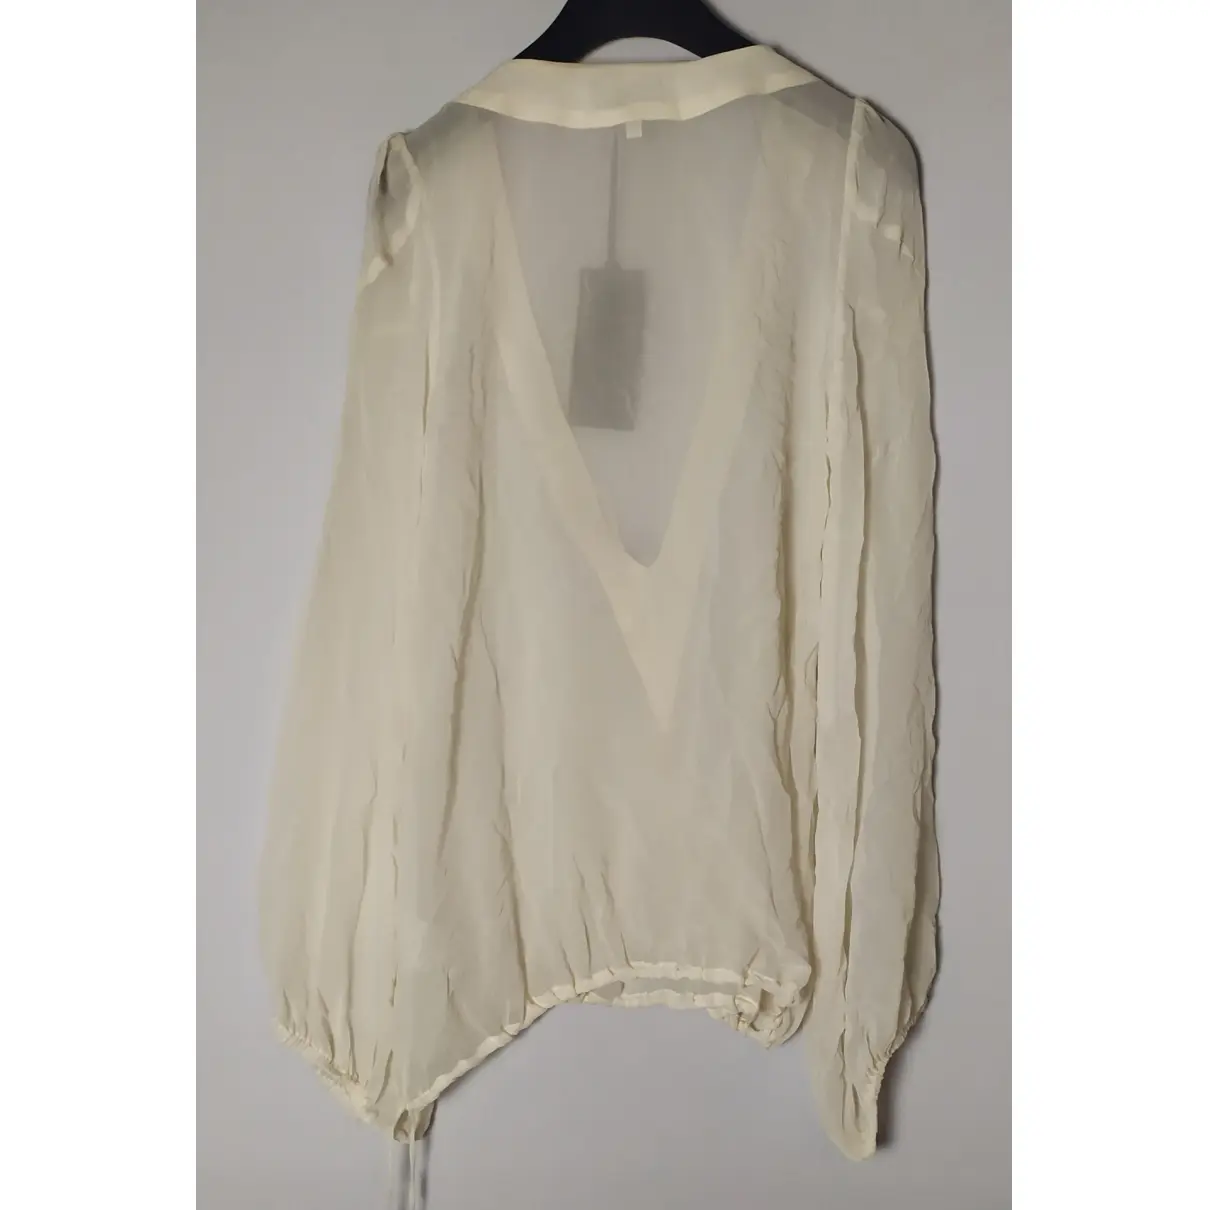 Buy John Richmond Silk blouse online